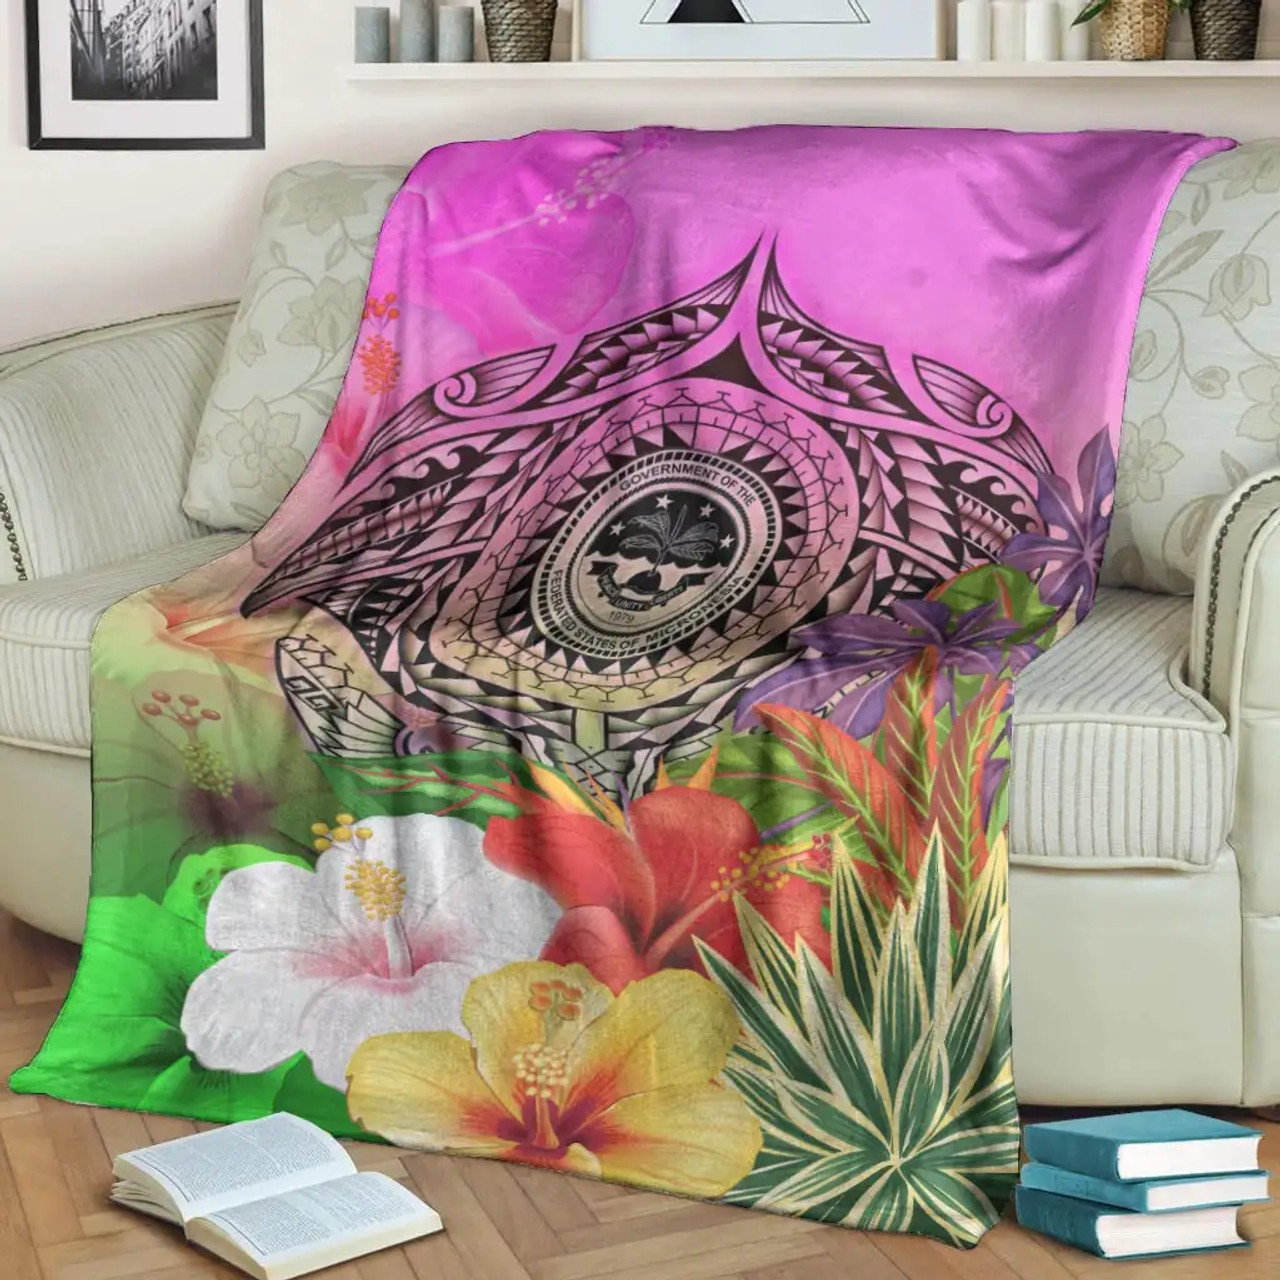 Fsm Polynesian Premium Blanket - Manta Ray Tropical Flowers 3